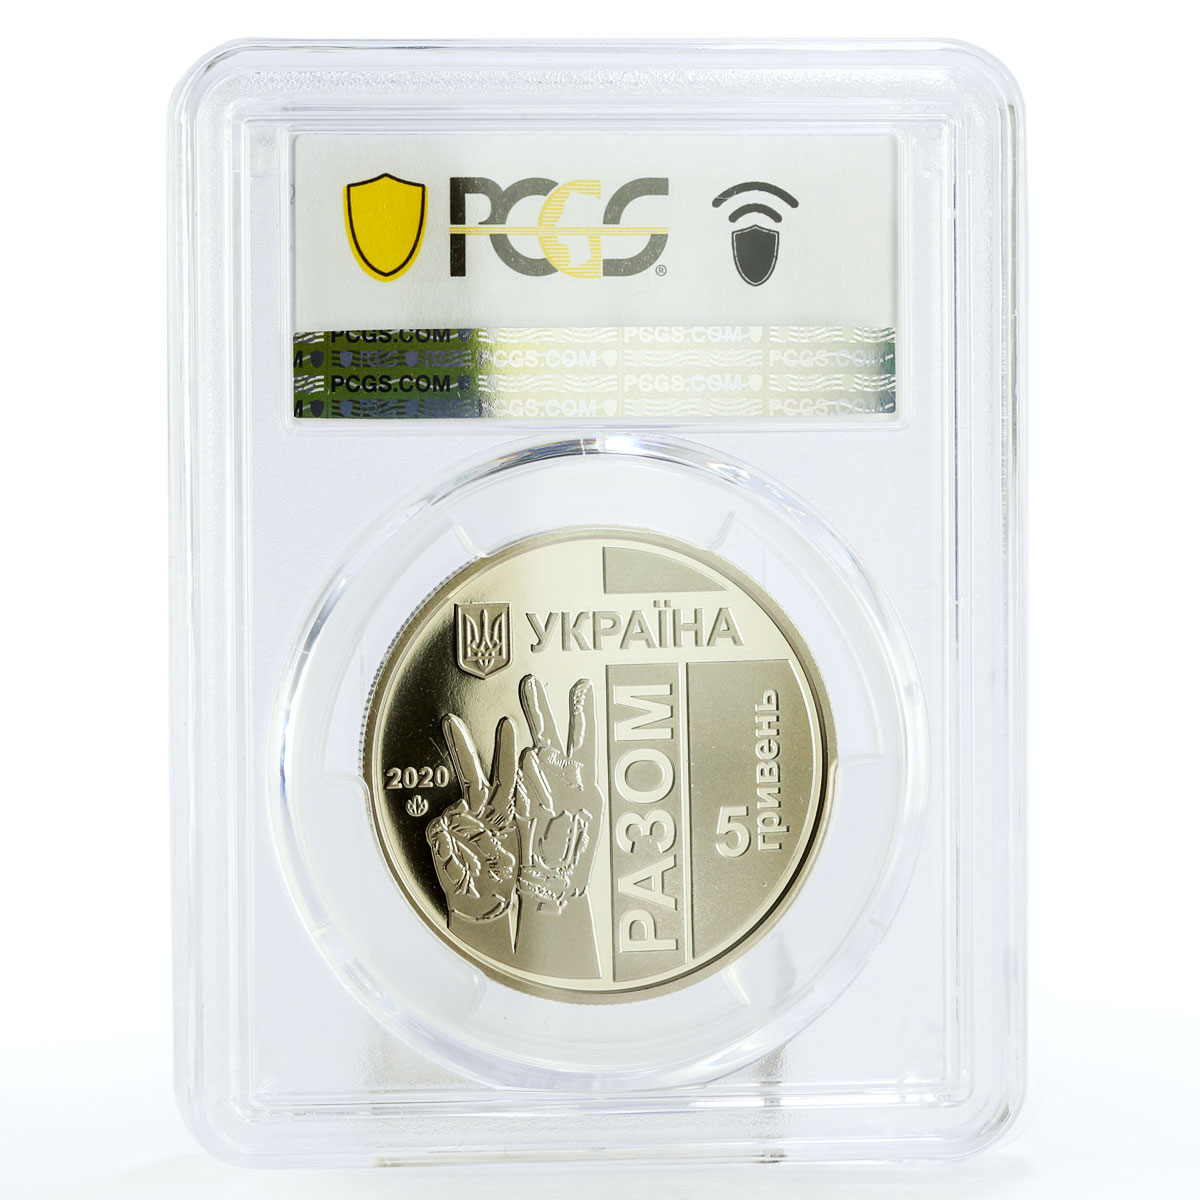 Ukraine 5 hryvnias Frontline Doctor Soldier MS68 PCGS nickel coin 2020